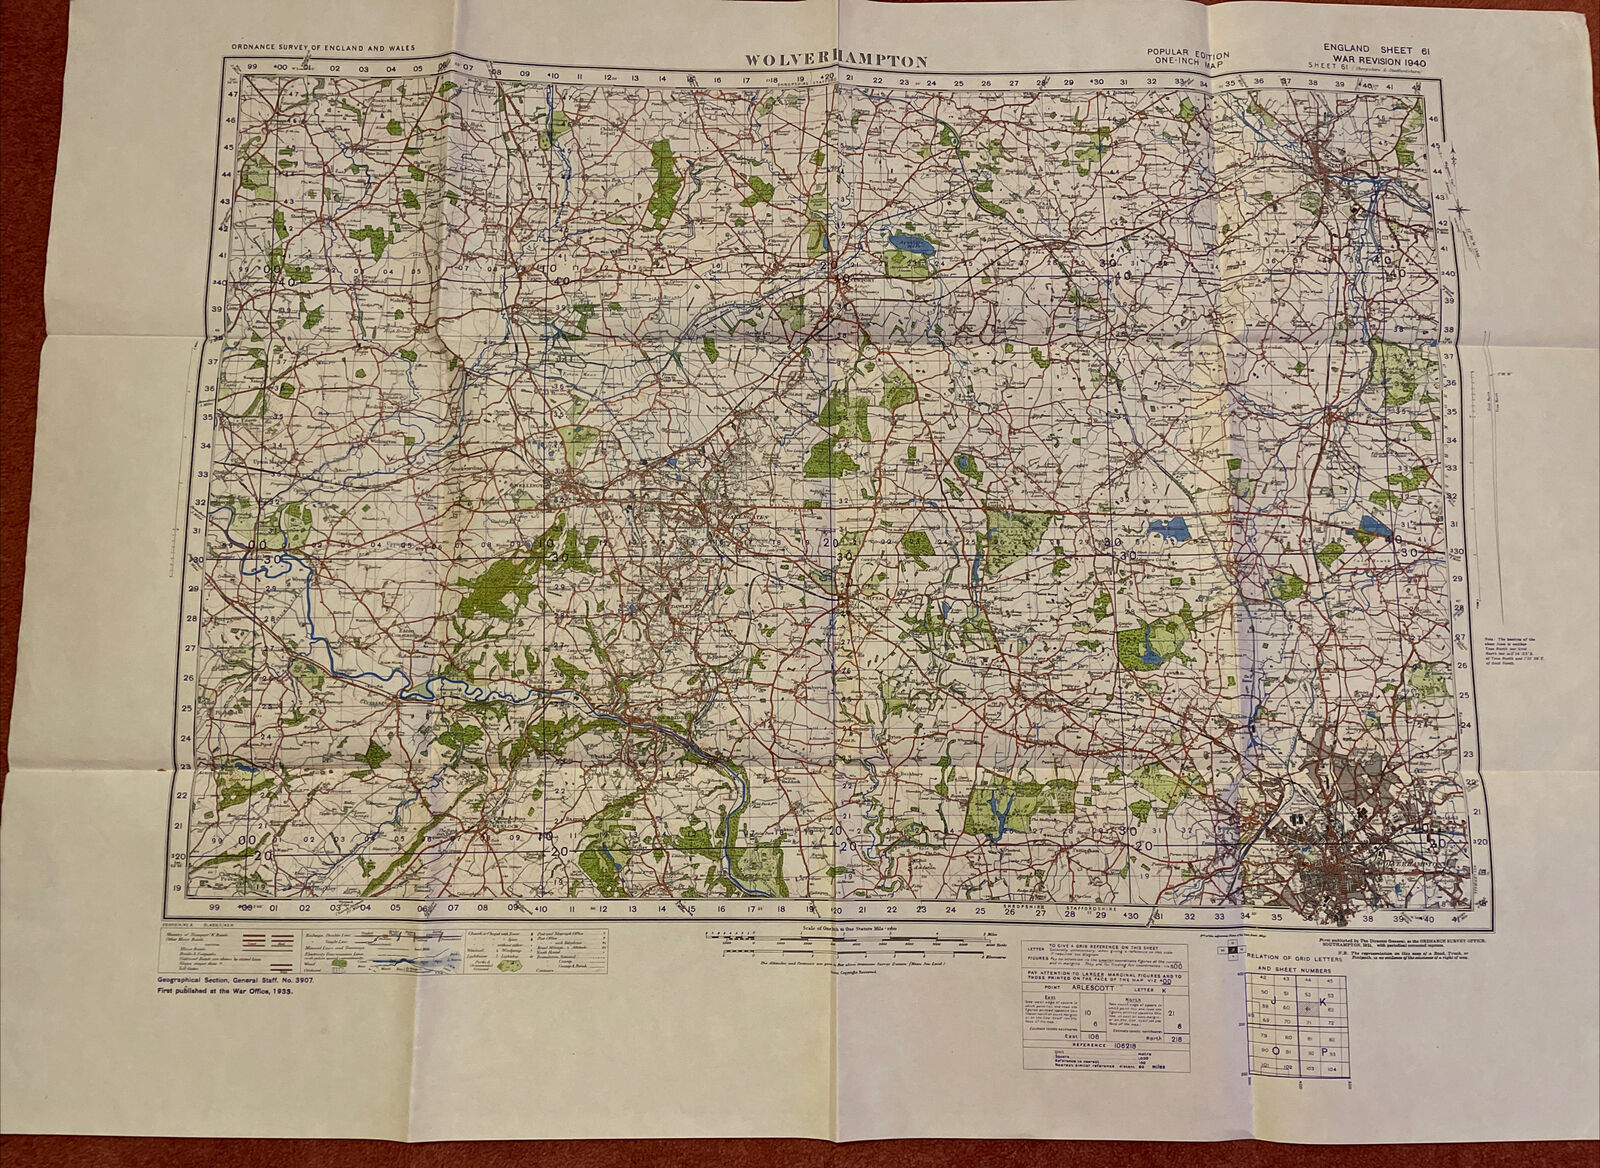 Map of Wolverhampton WW2 WAR REVISION 1940 Ordnance Survey SHEET 61